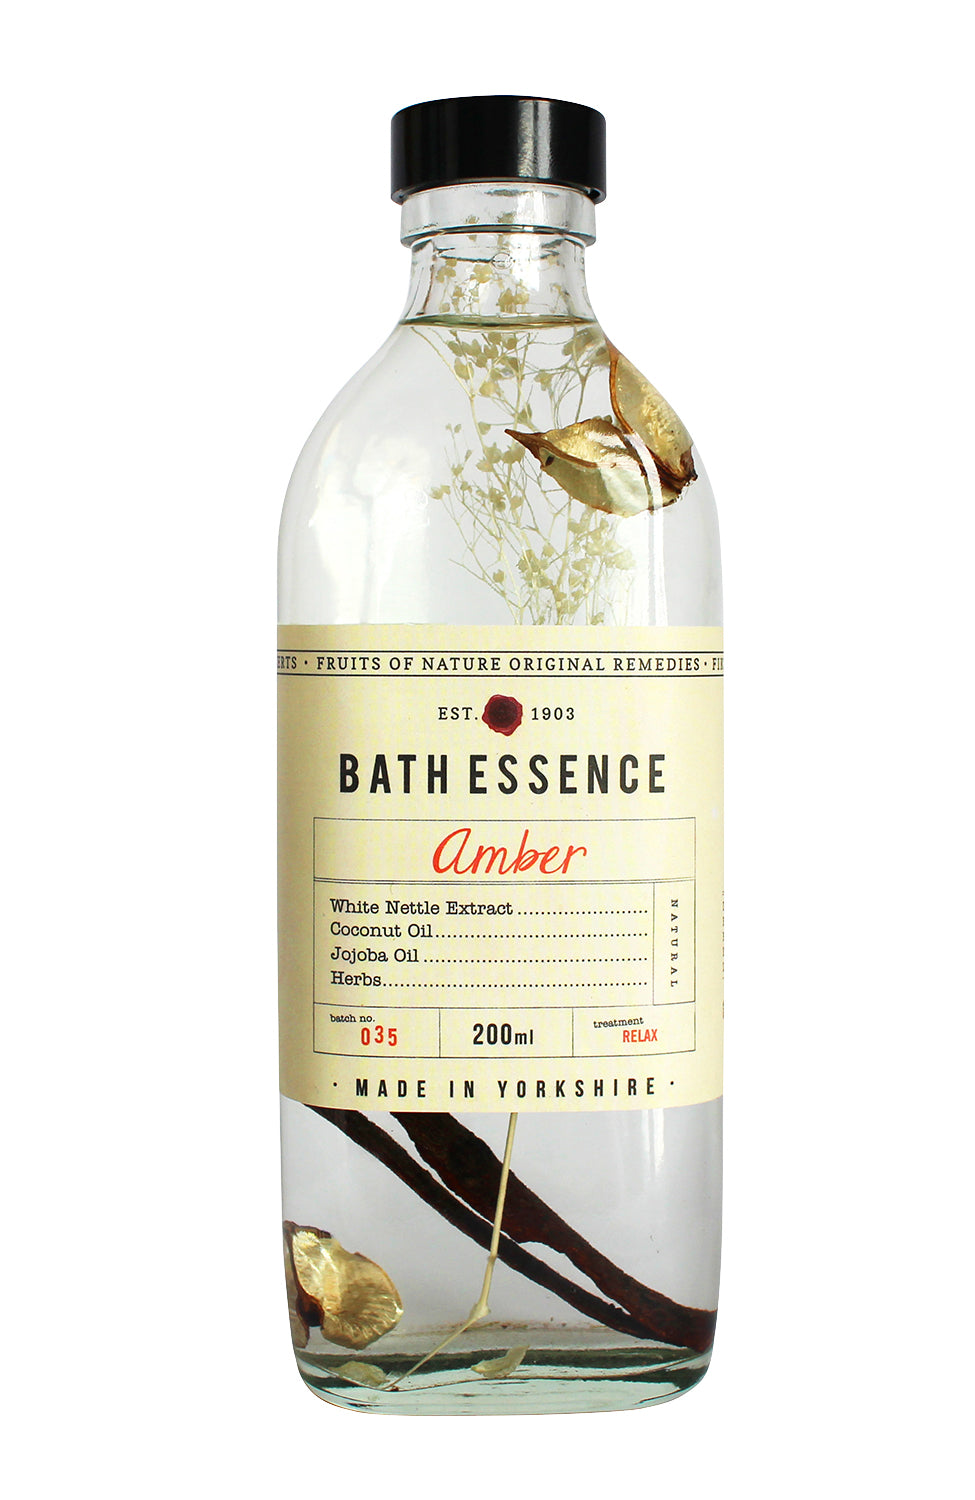 Amber bath essence